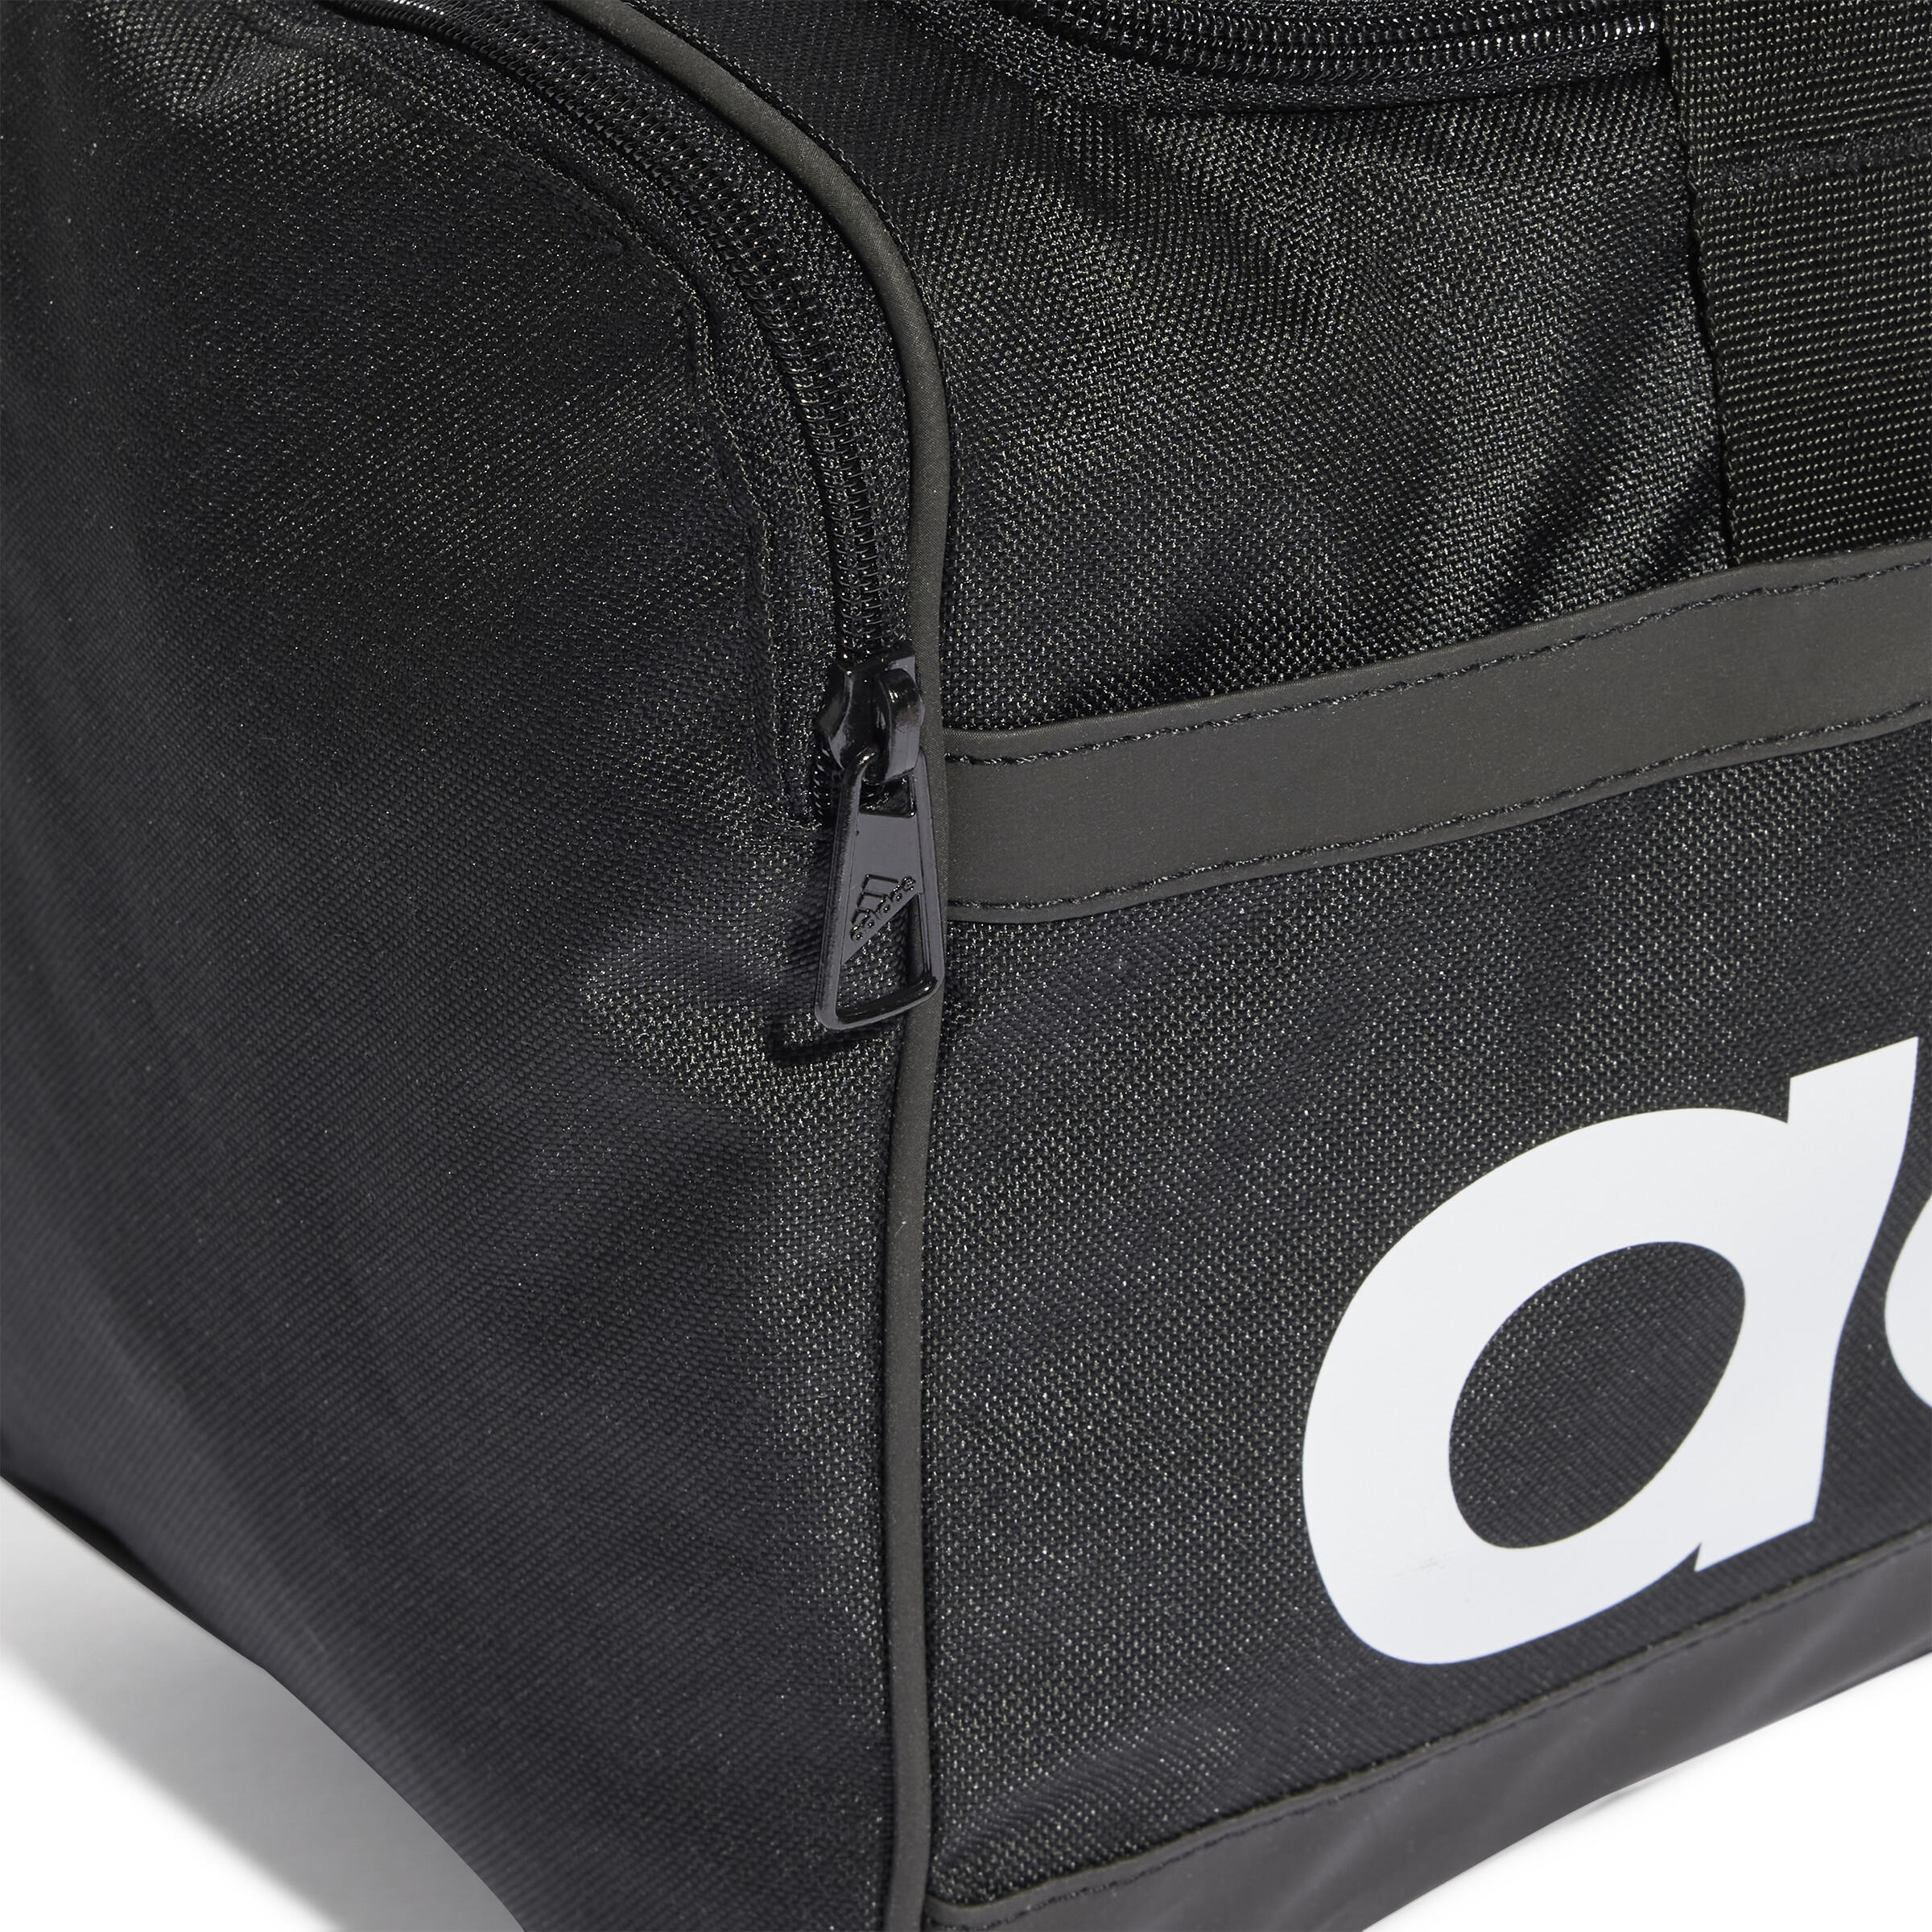 Duffle Bag Size S - Black/White 4/4